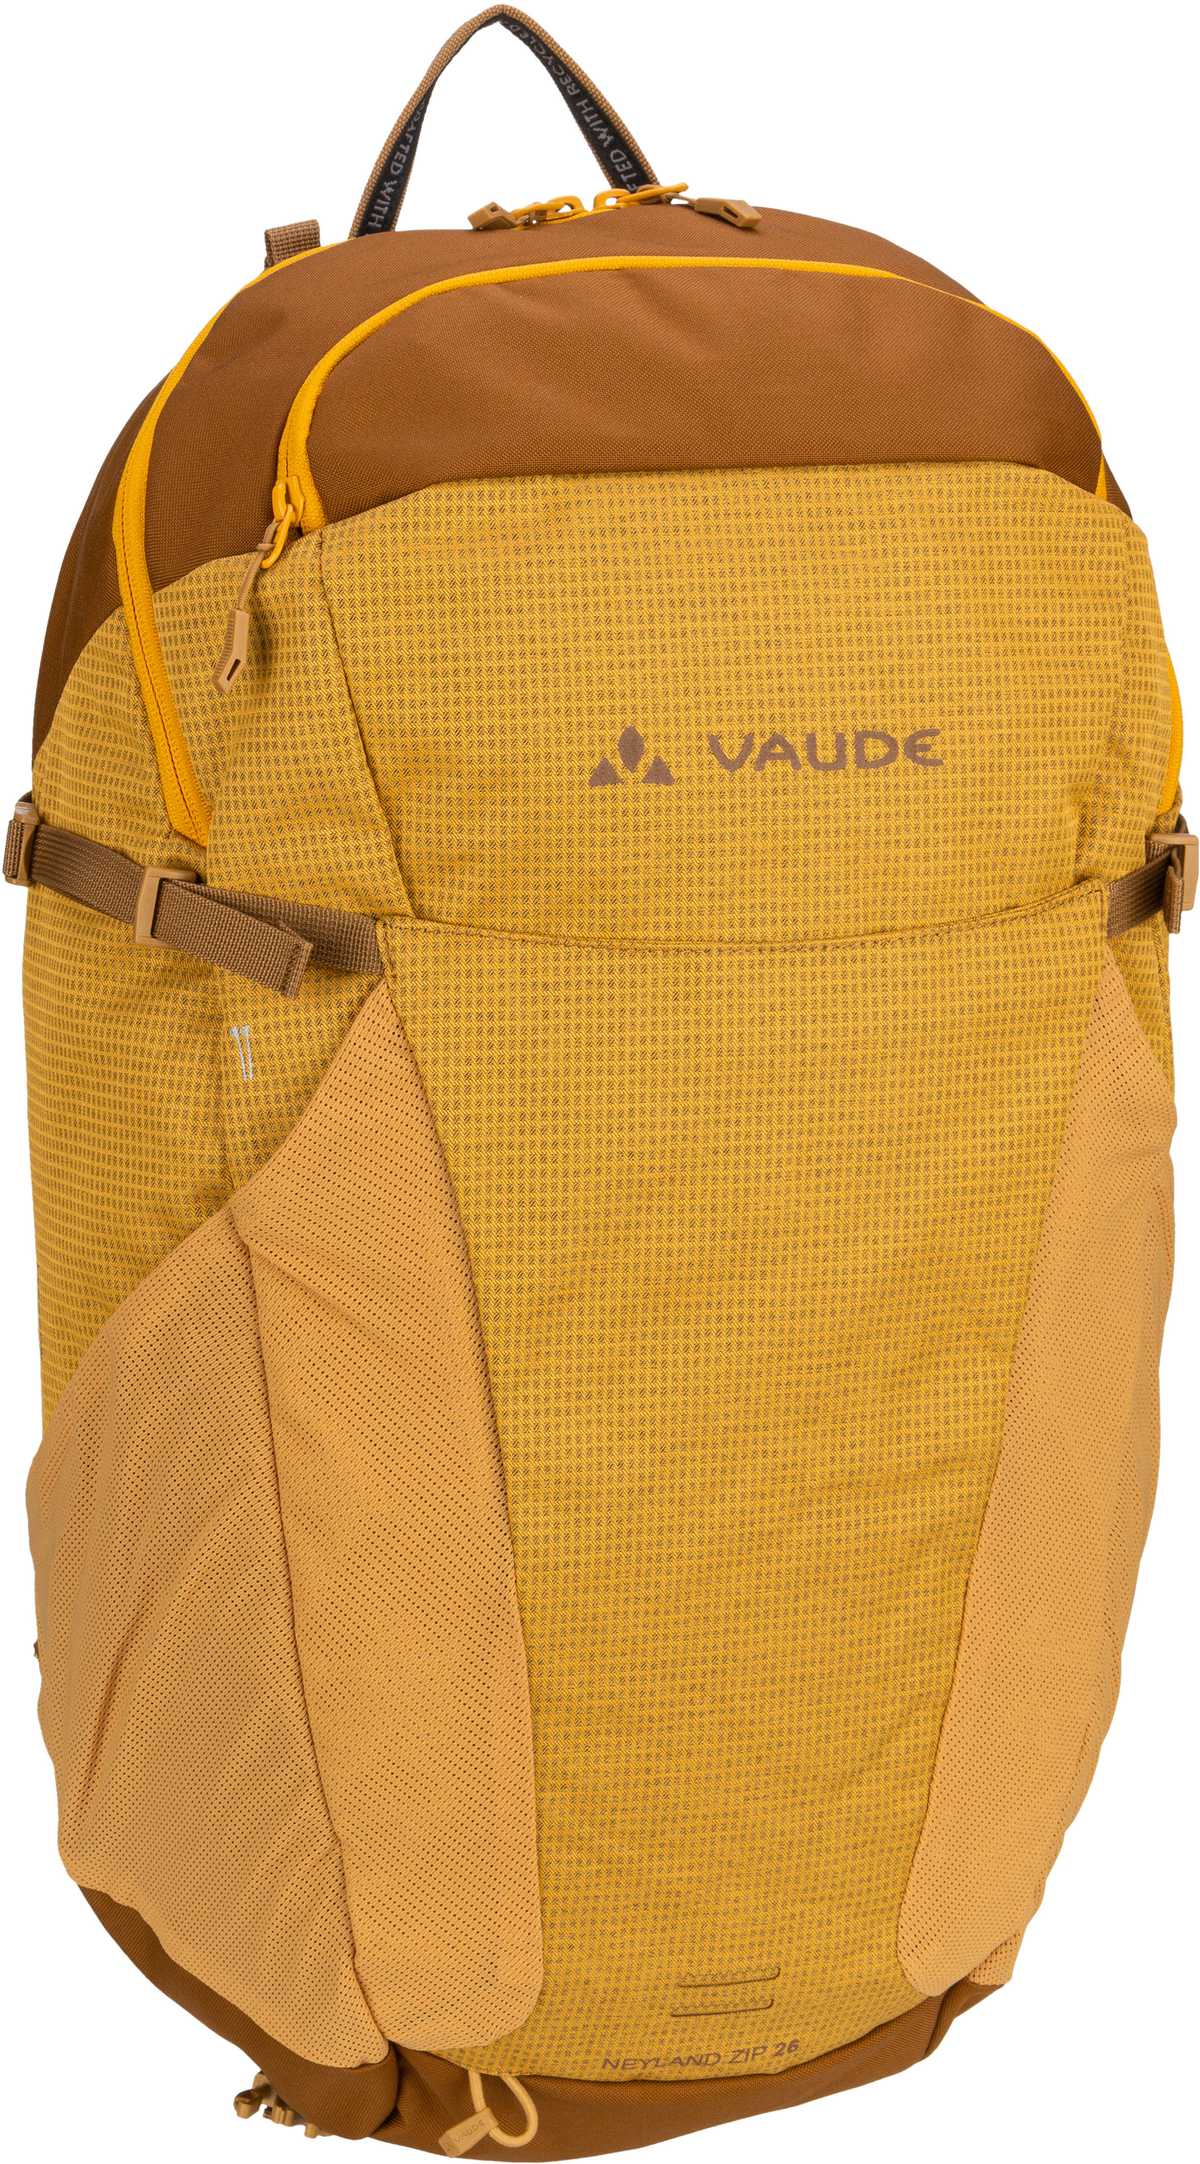 Vaude Neyland Zip 26 - Burnt Yellow